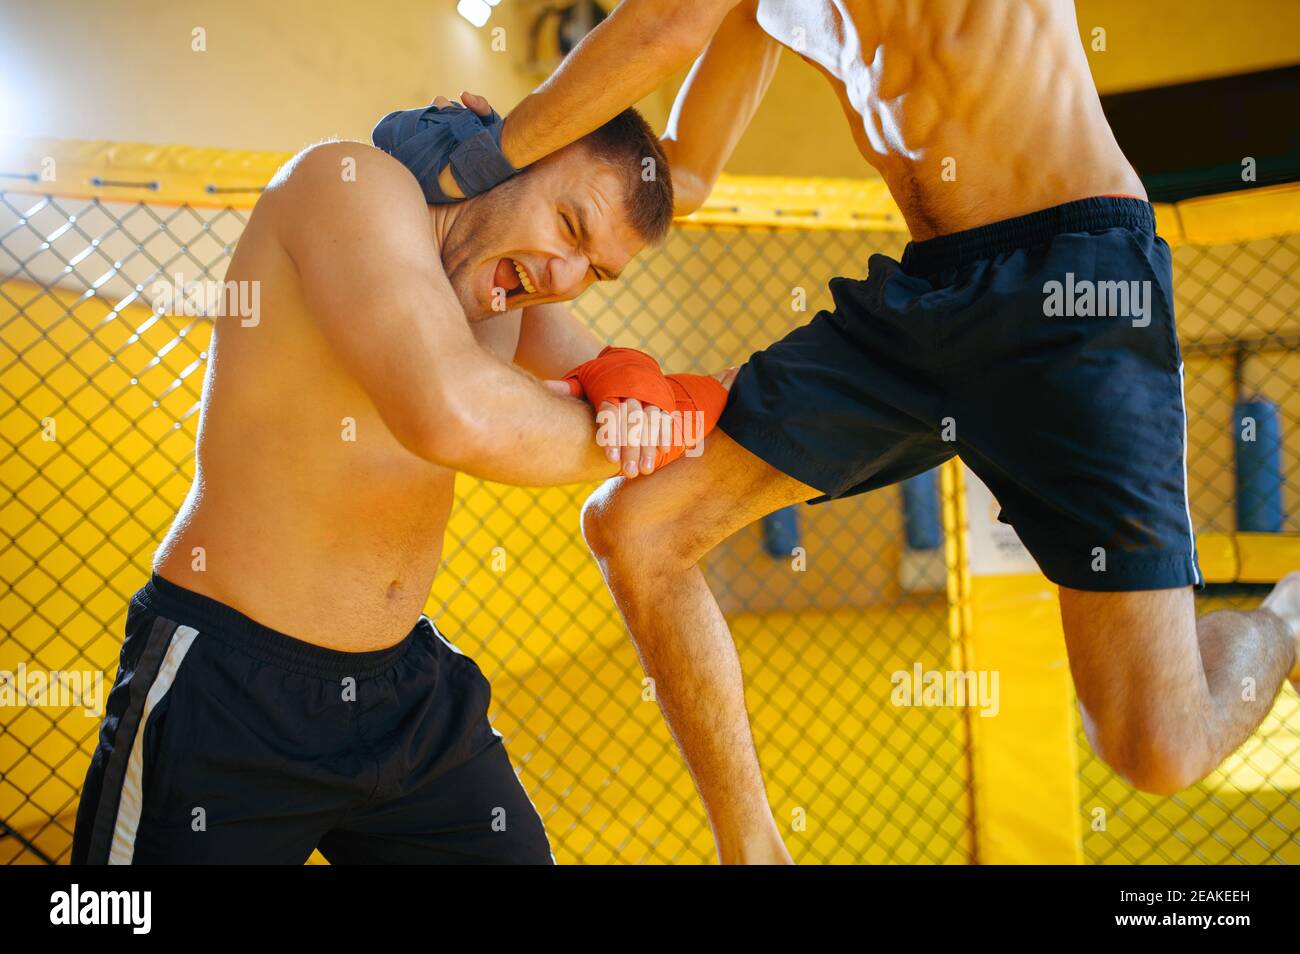 Male MMA fighter blocks knee hit, combat workout Stock Photo